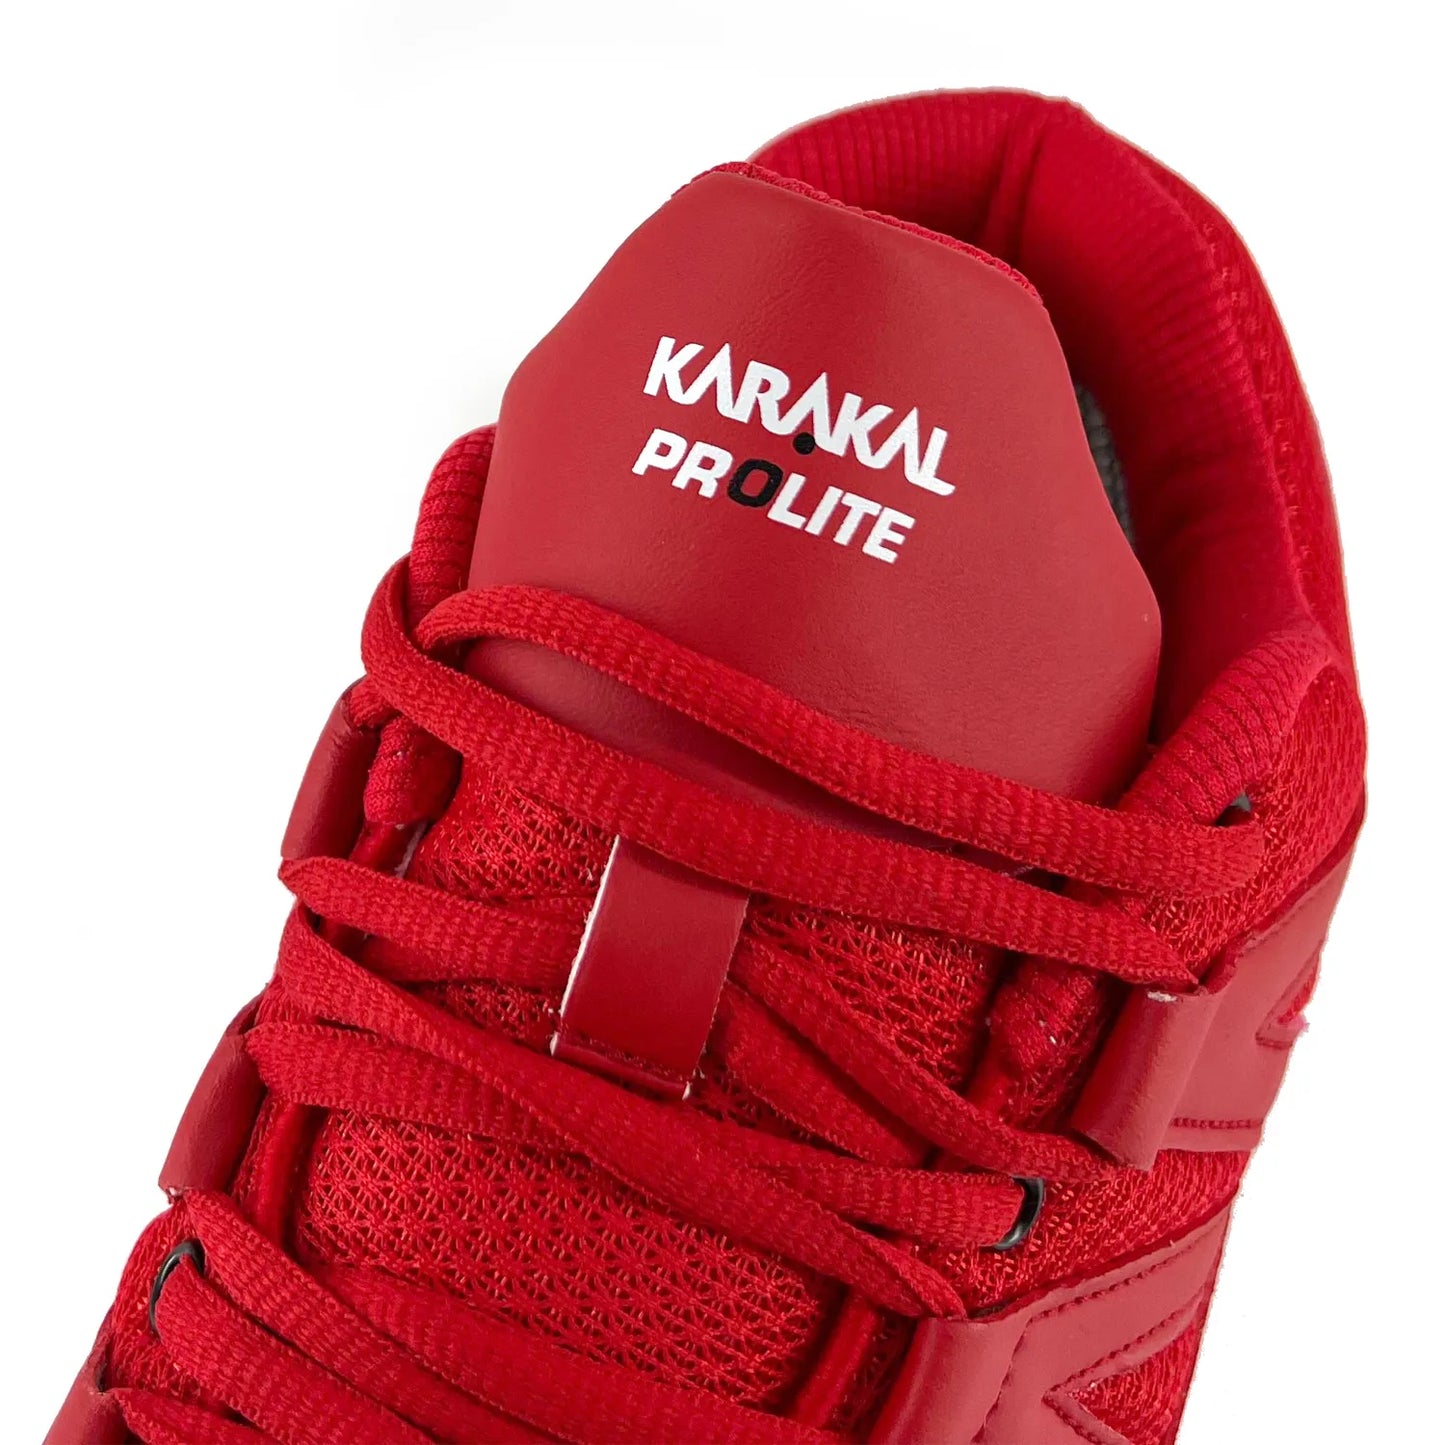 Karakal ProLite Court Shoe in Red